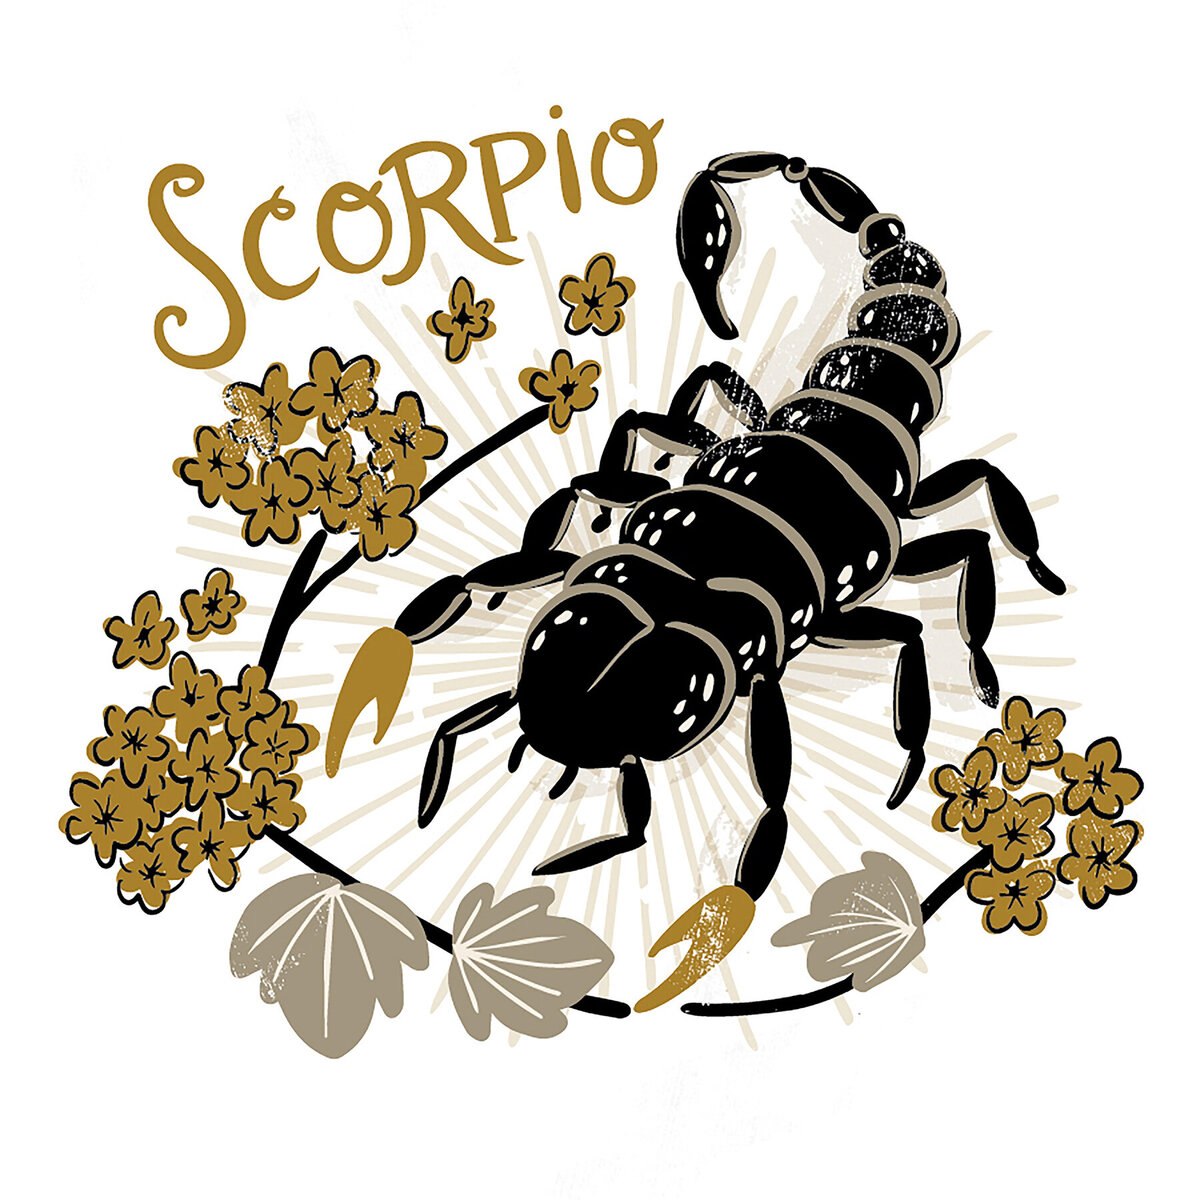 Scorpio_RW2-01